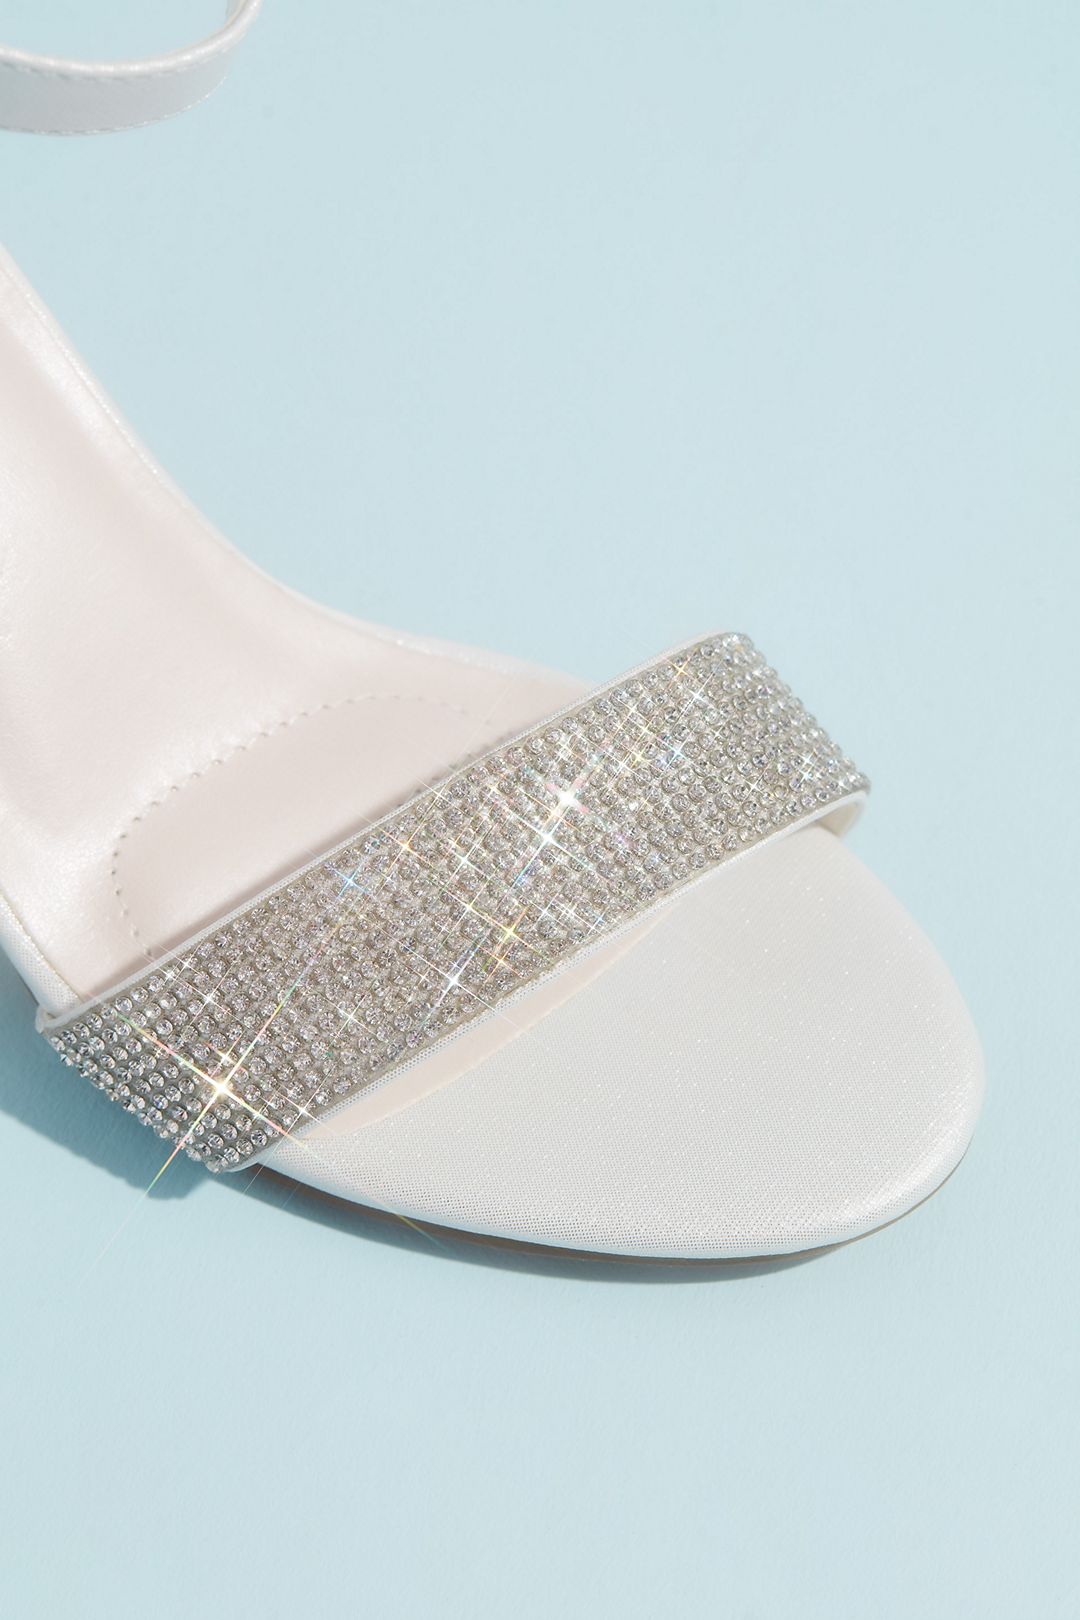 Block Heel with Crystal Toe Strap | David's Bridal